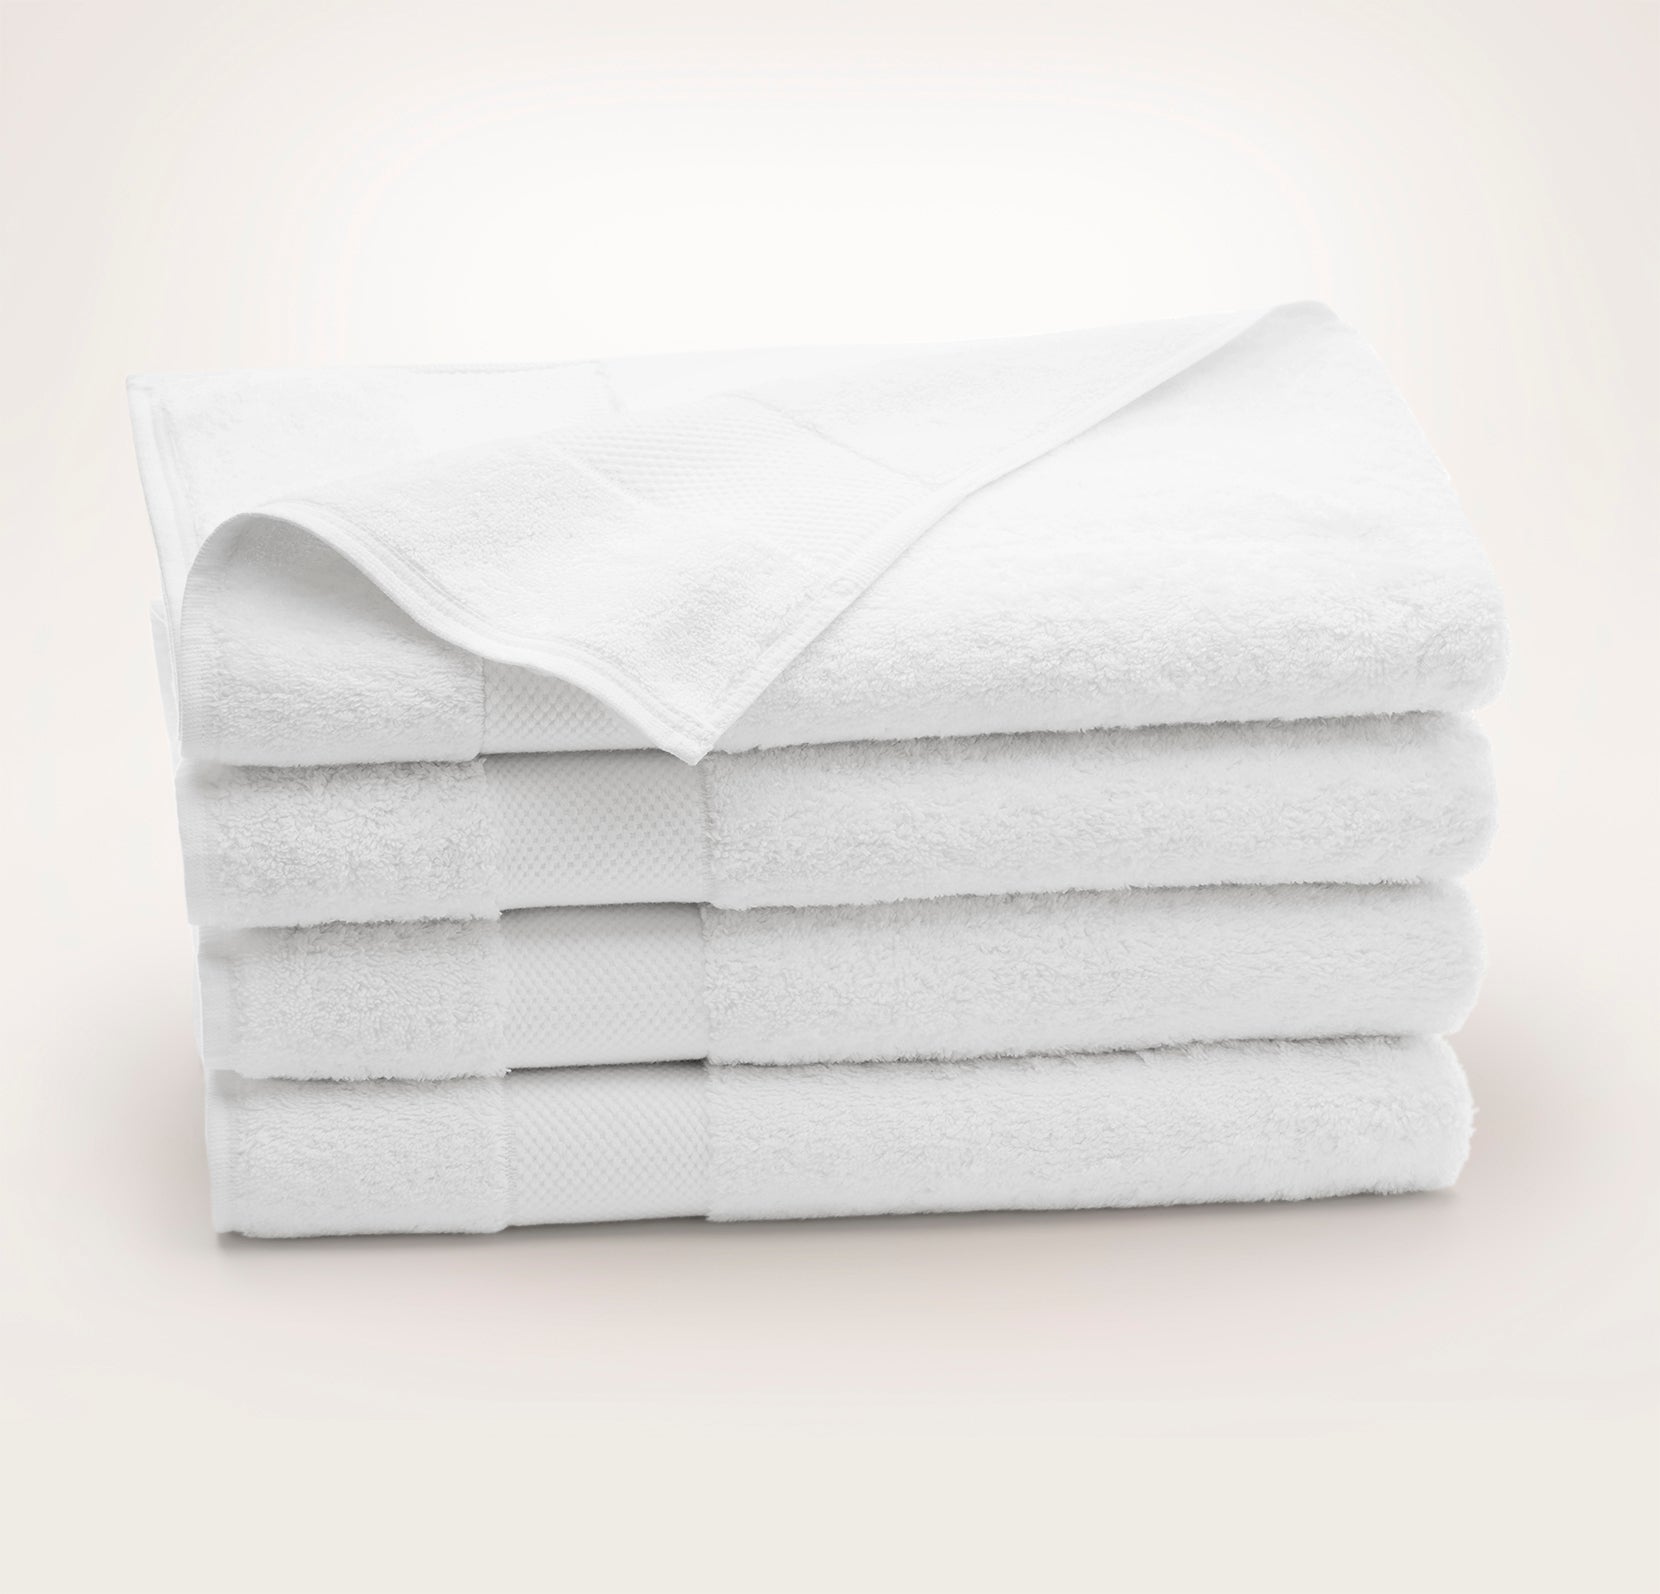 Bath Sheet  Shop Plush Bath Towels, Luxury Robes, Le Grand Bain Amenities,  and More